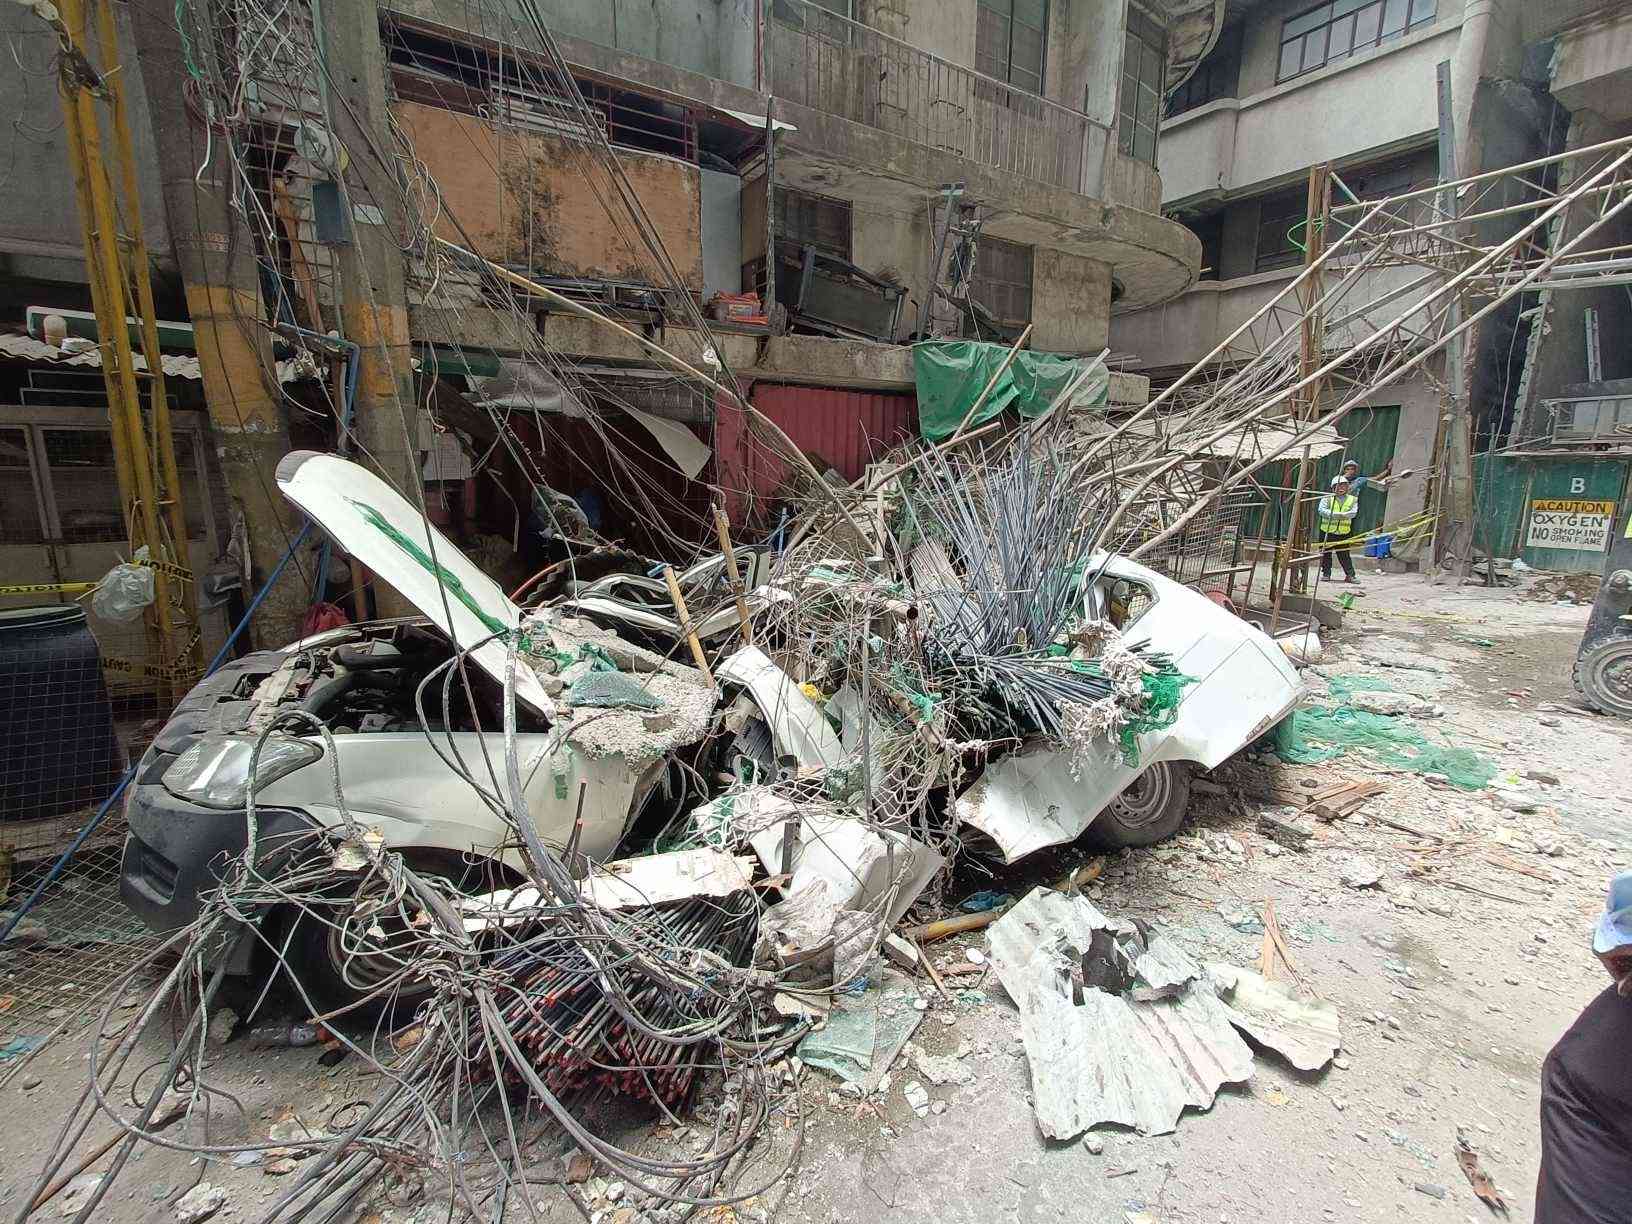 Metals from crane fell off, hits multiple vehicles in Binondo, Manila